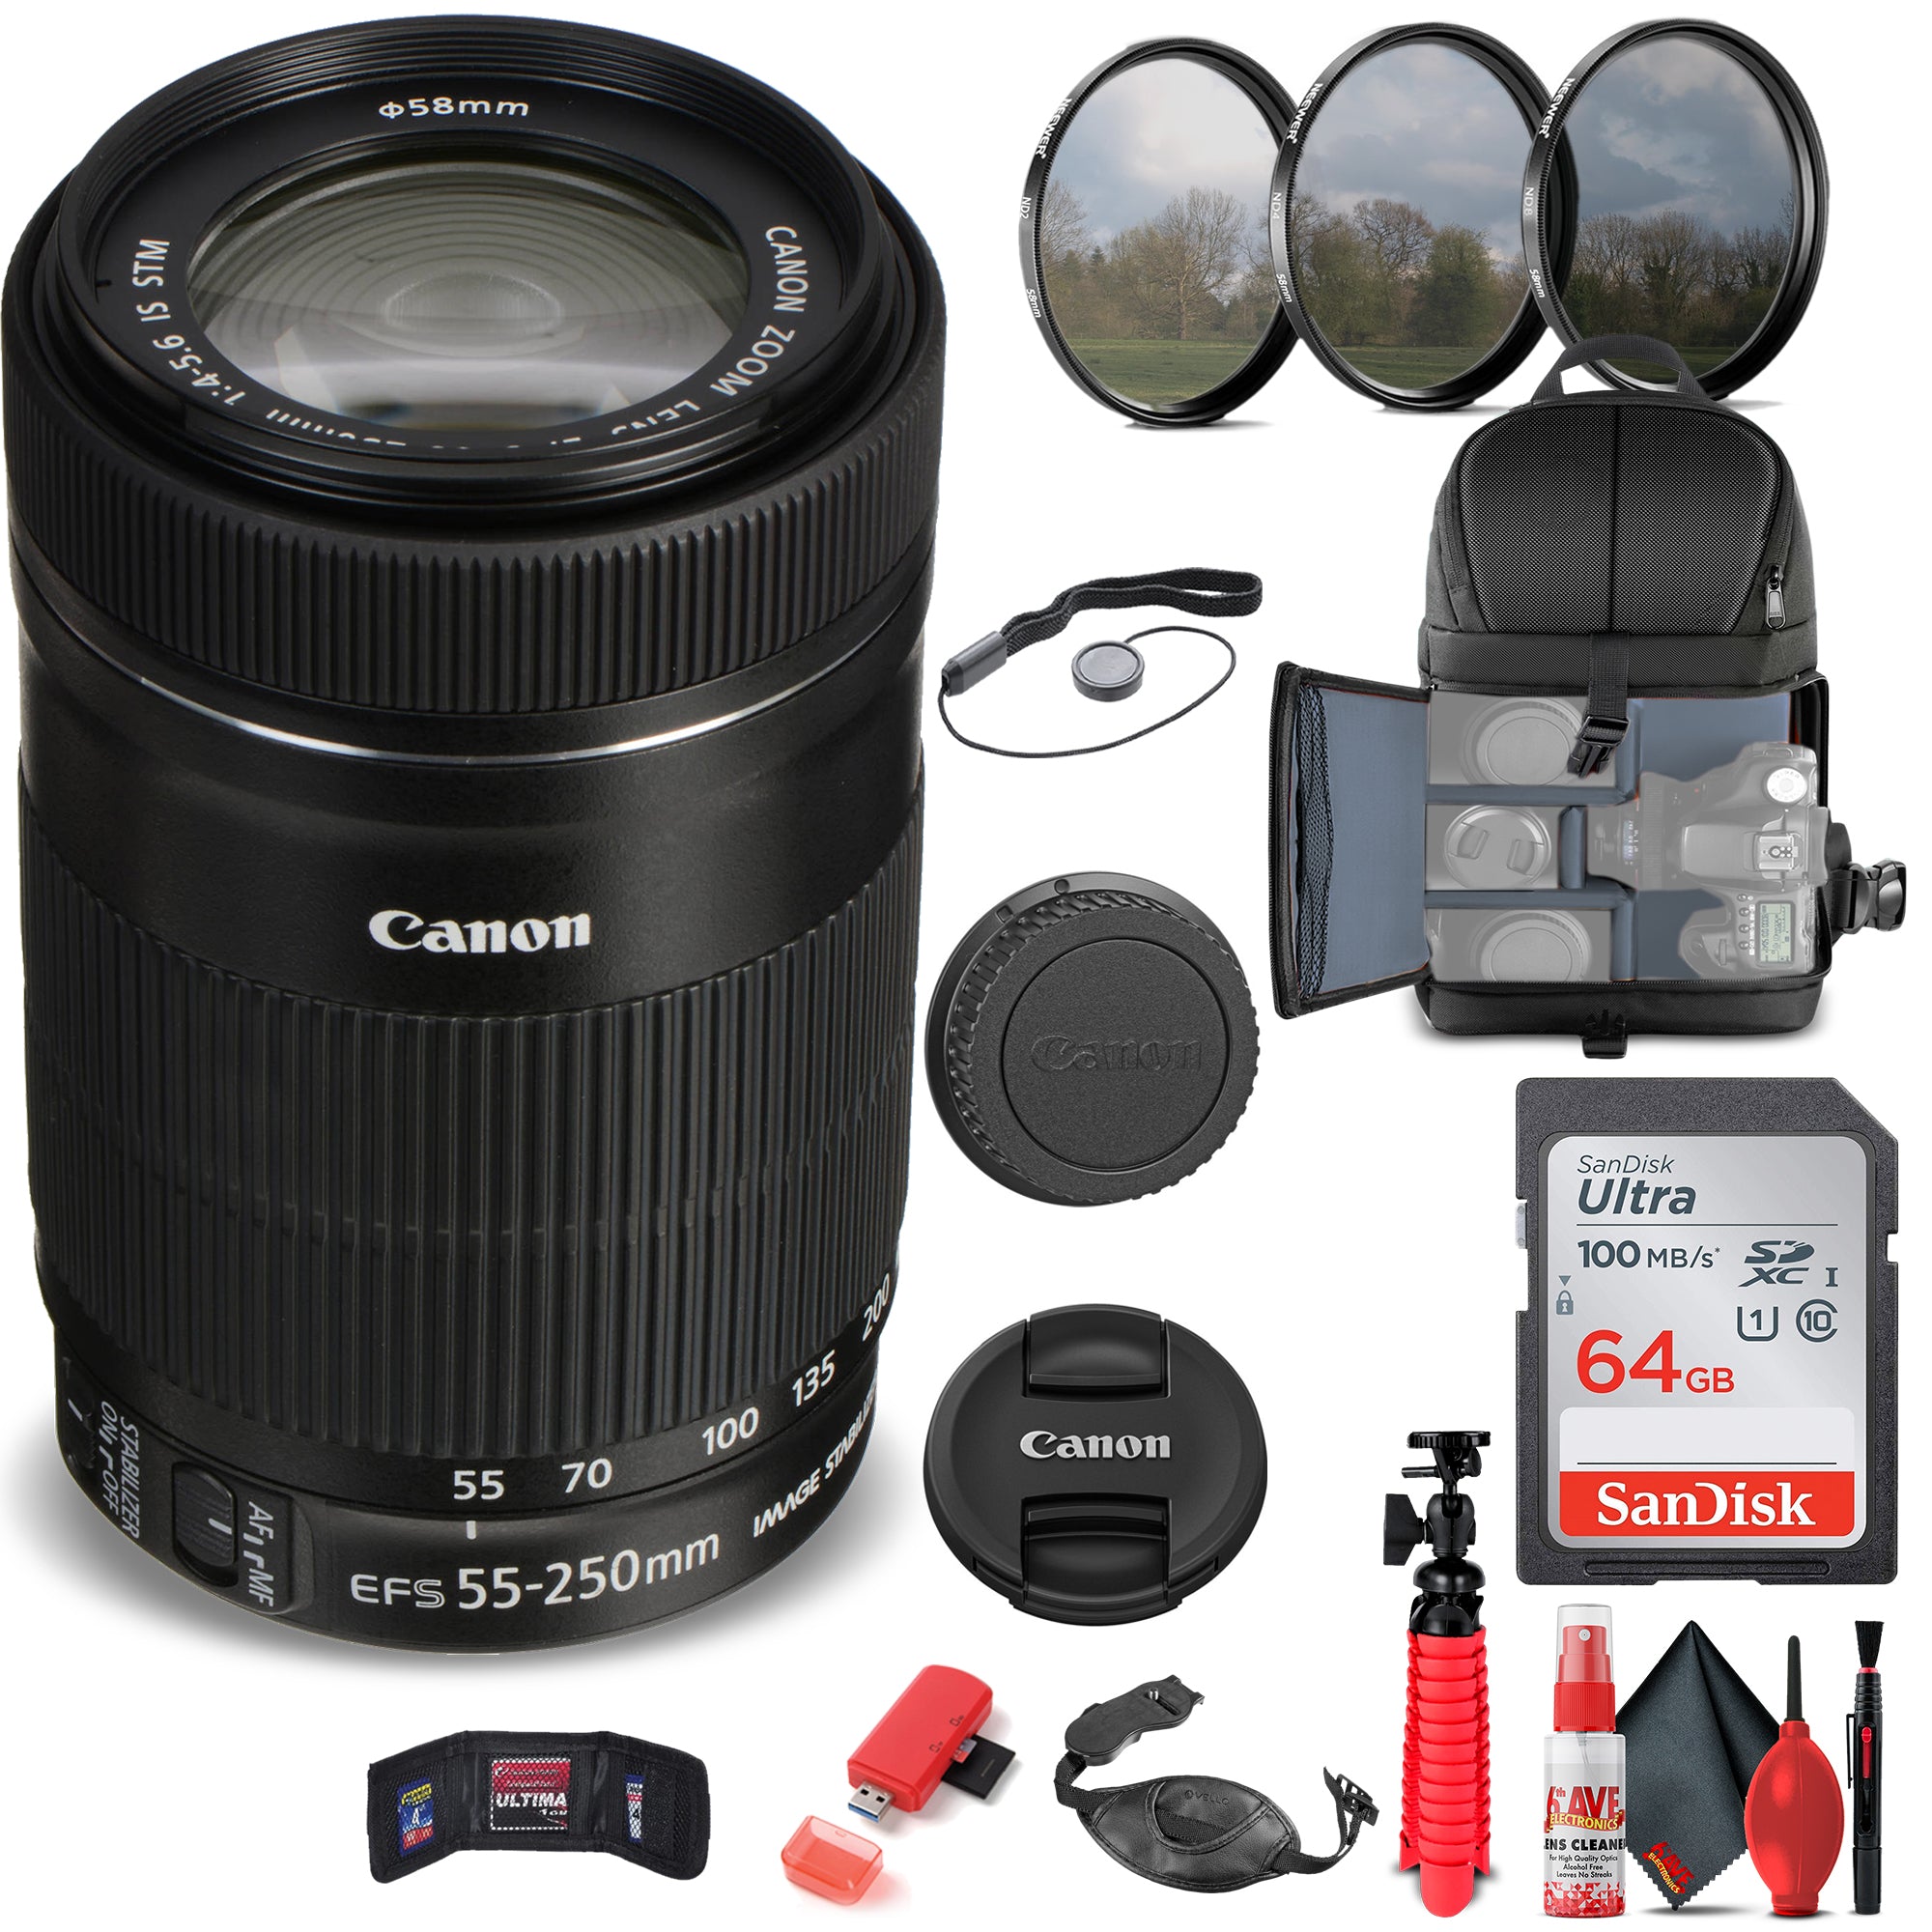 Canon EF-S 55-250mm f/4-5.6 IS STM Lens (8546B002) + Filter + BackPack + More